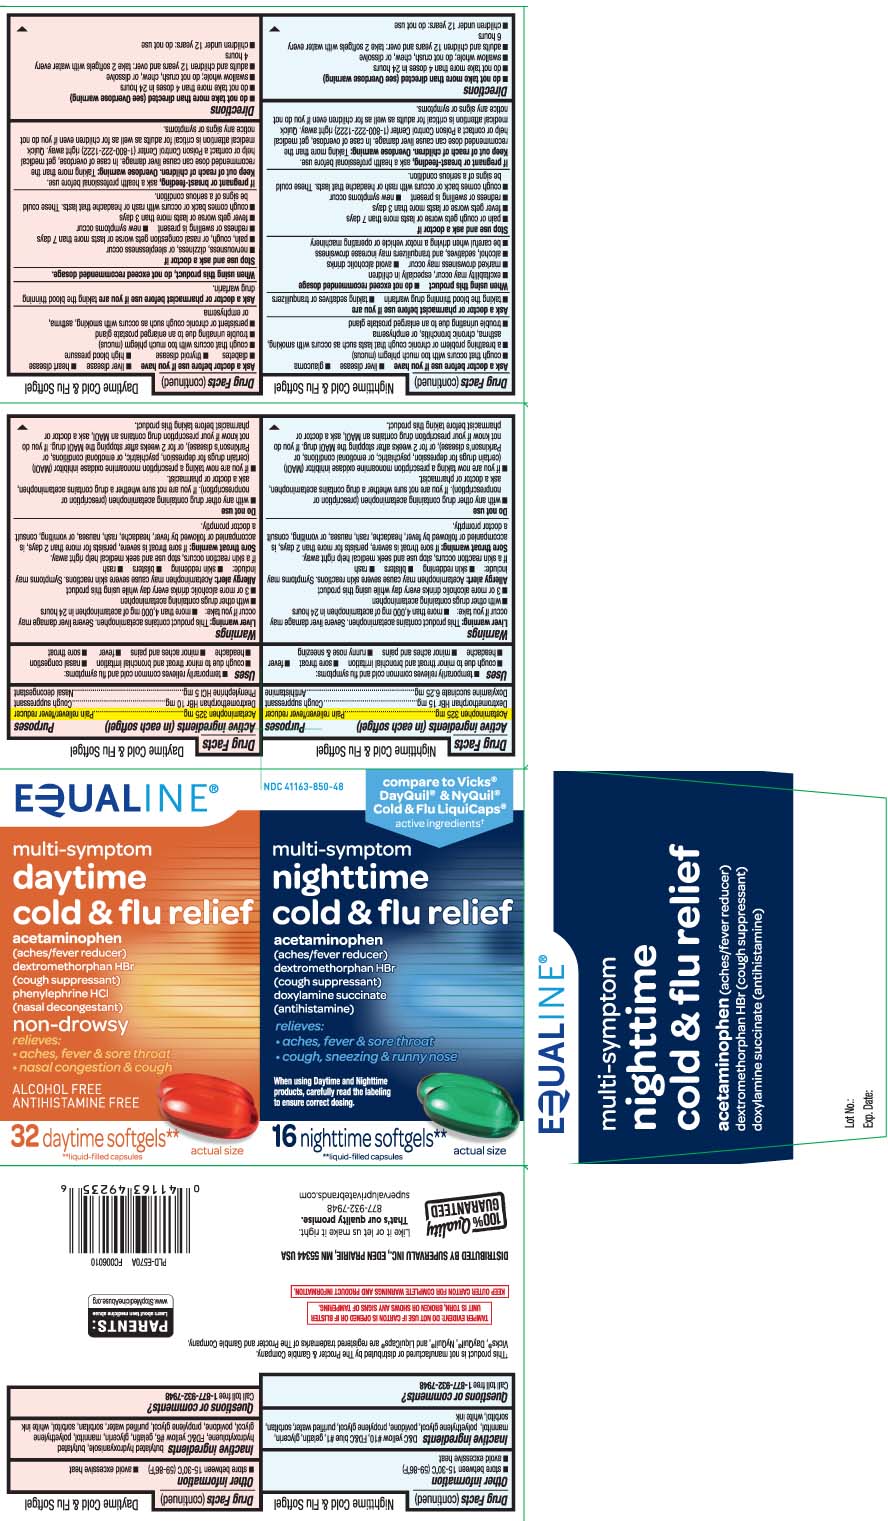 Acetaminophen 325 mg, Dextromethorphan HBr 10 mg, Phenylephrine HCL 5 mg, Acetaminophen 325 mg, Dextromethorphan HBr 15 mg, Doxylamine Succinate 6.25 mg